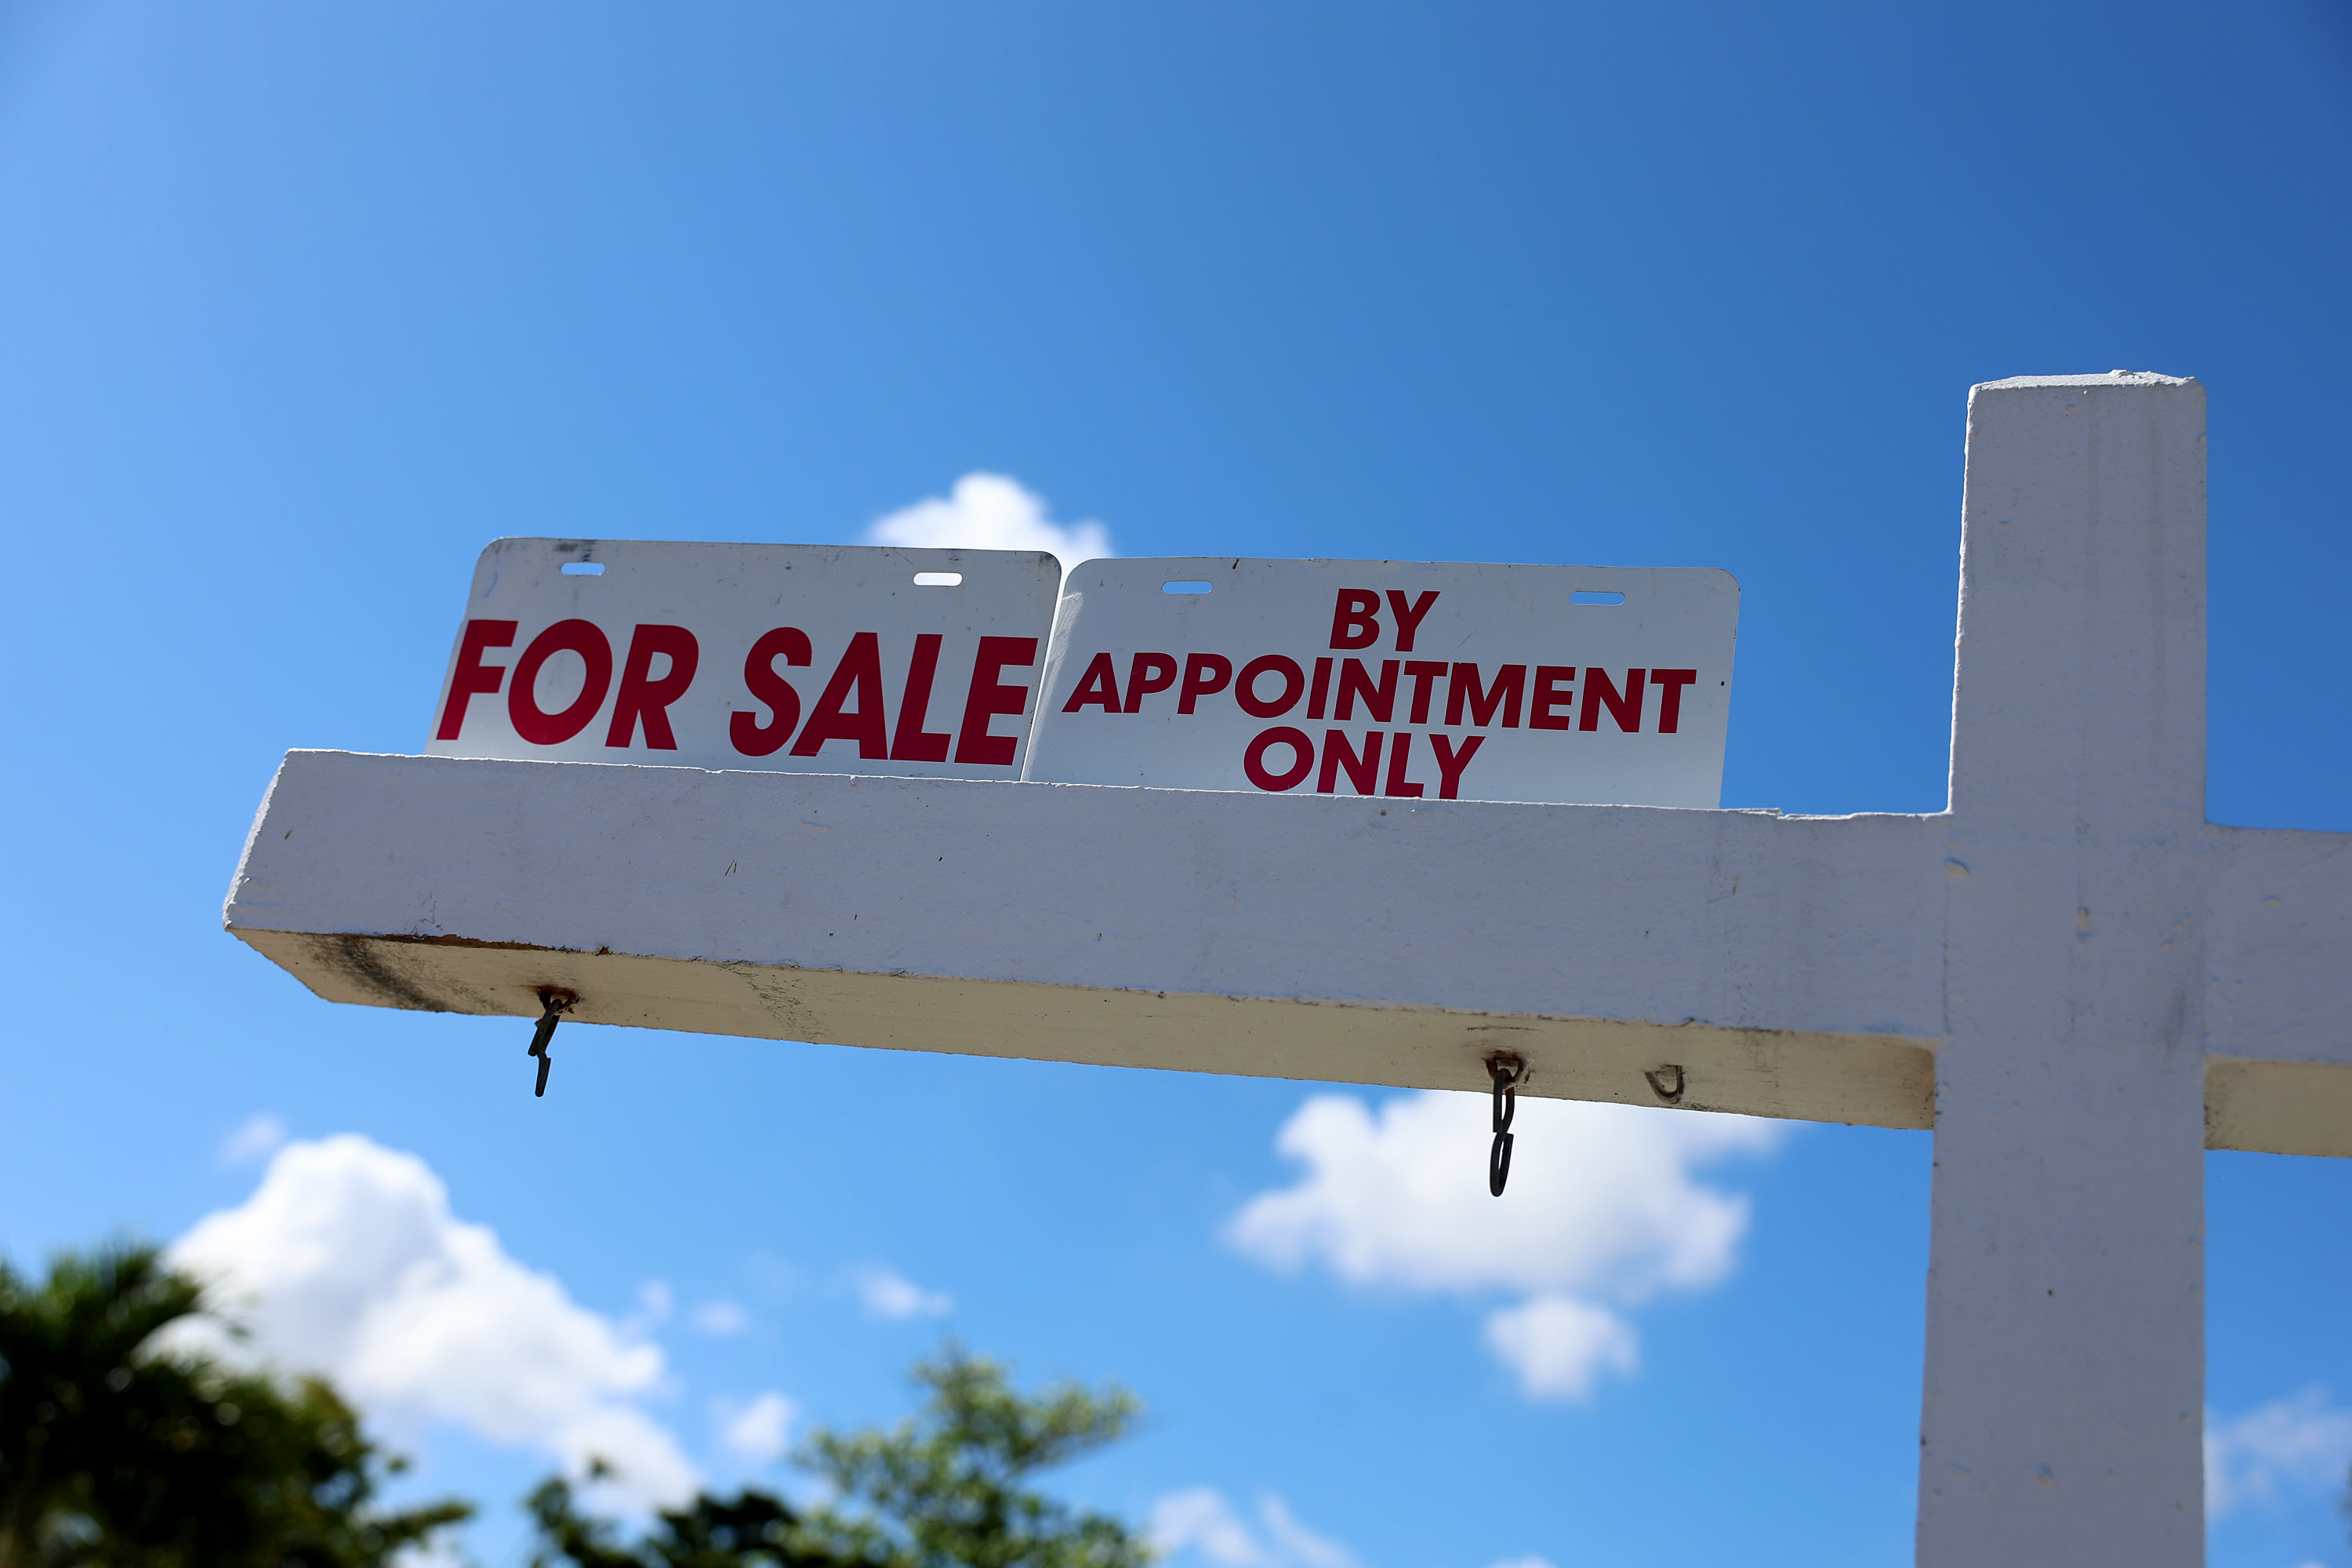 Real estate brokerages seek final approval of landmark settlements with homebuyers